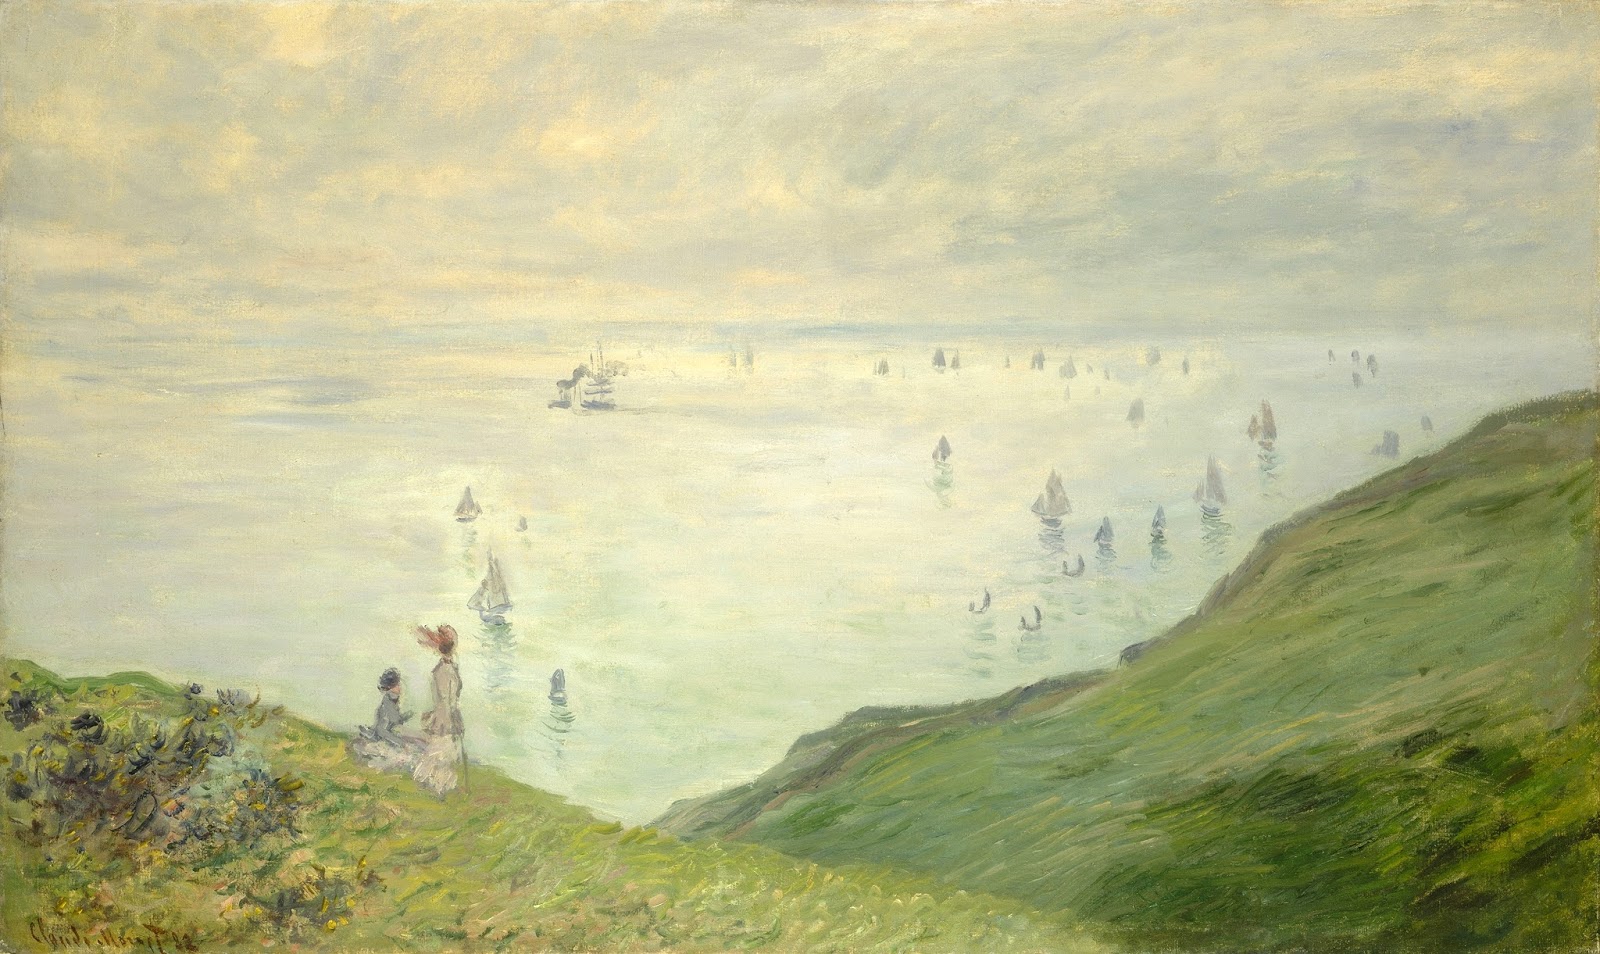 Claude+Monet-1840-1926 (195).jpg